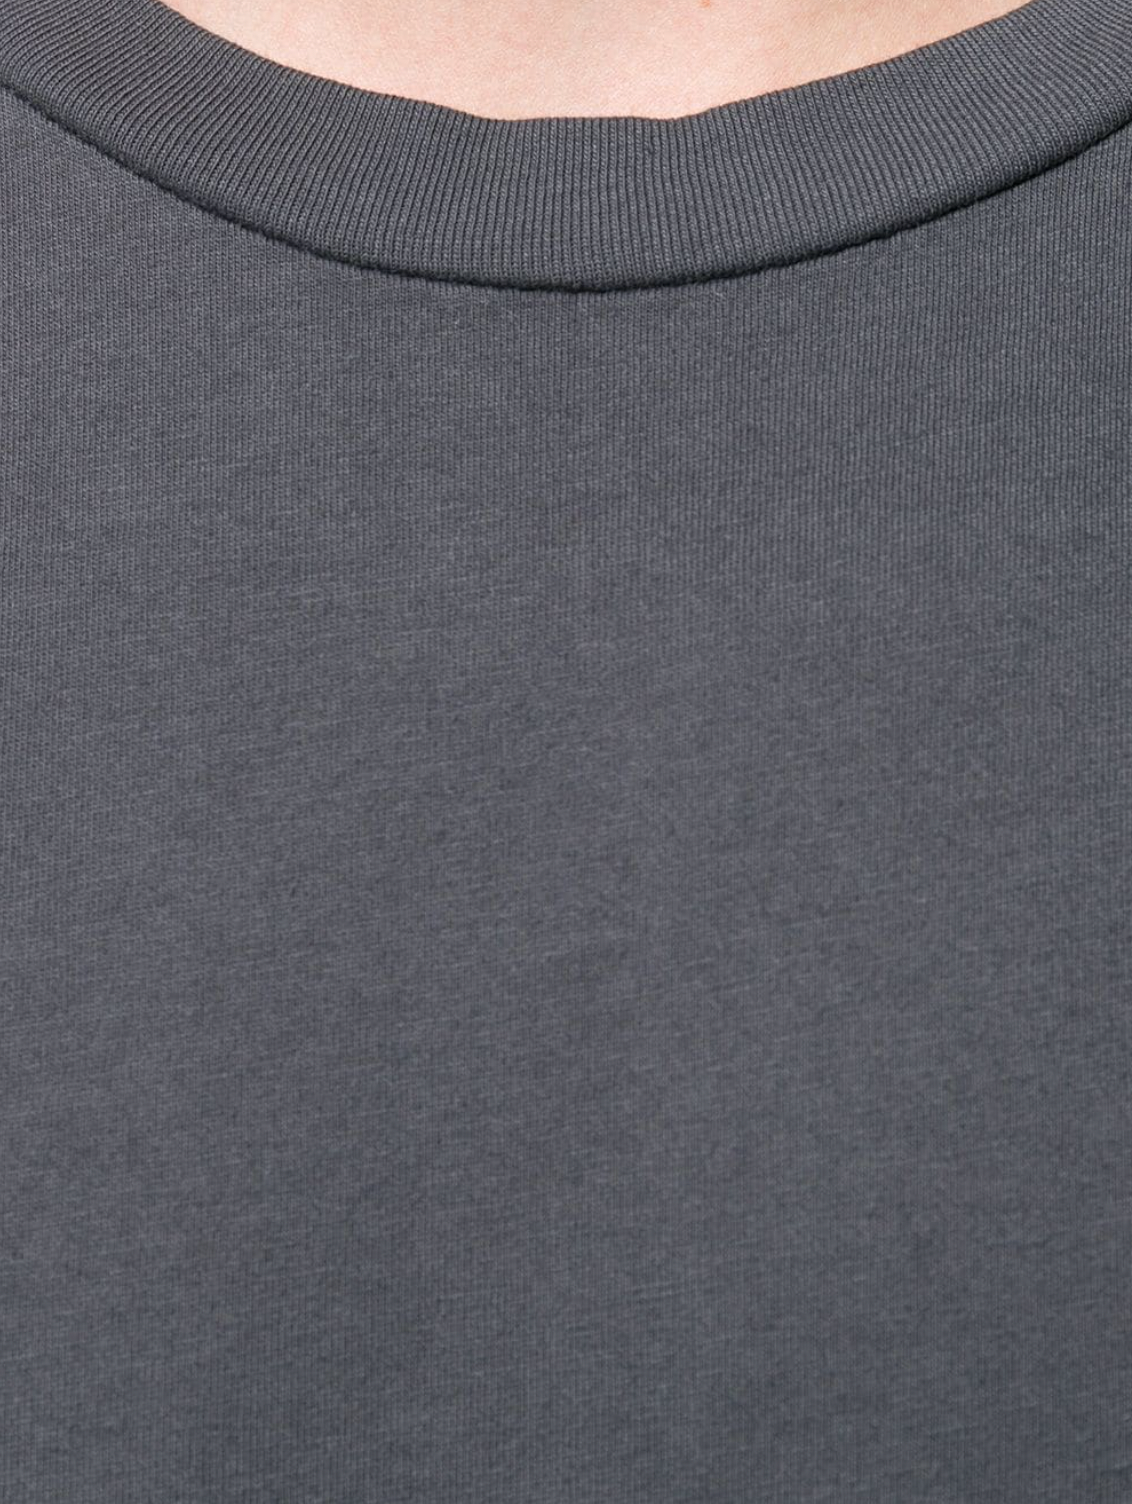 Crossley T-shirt in Grey